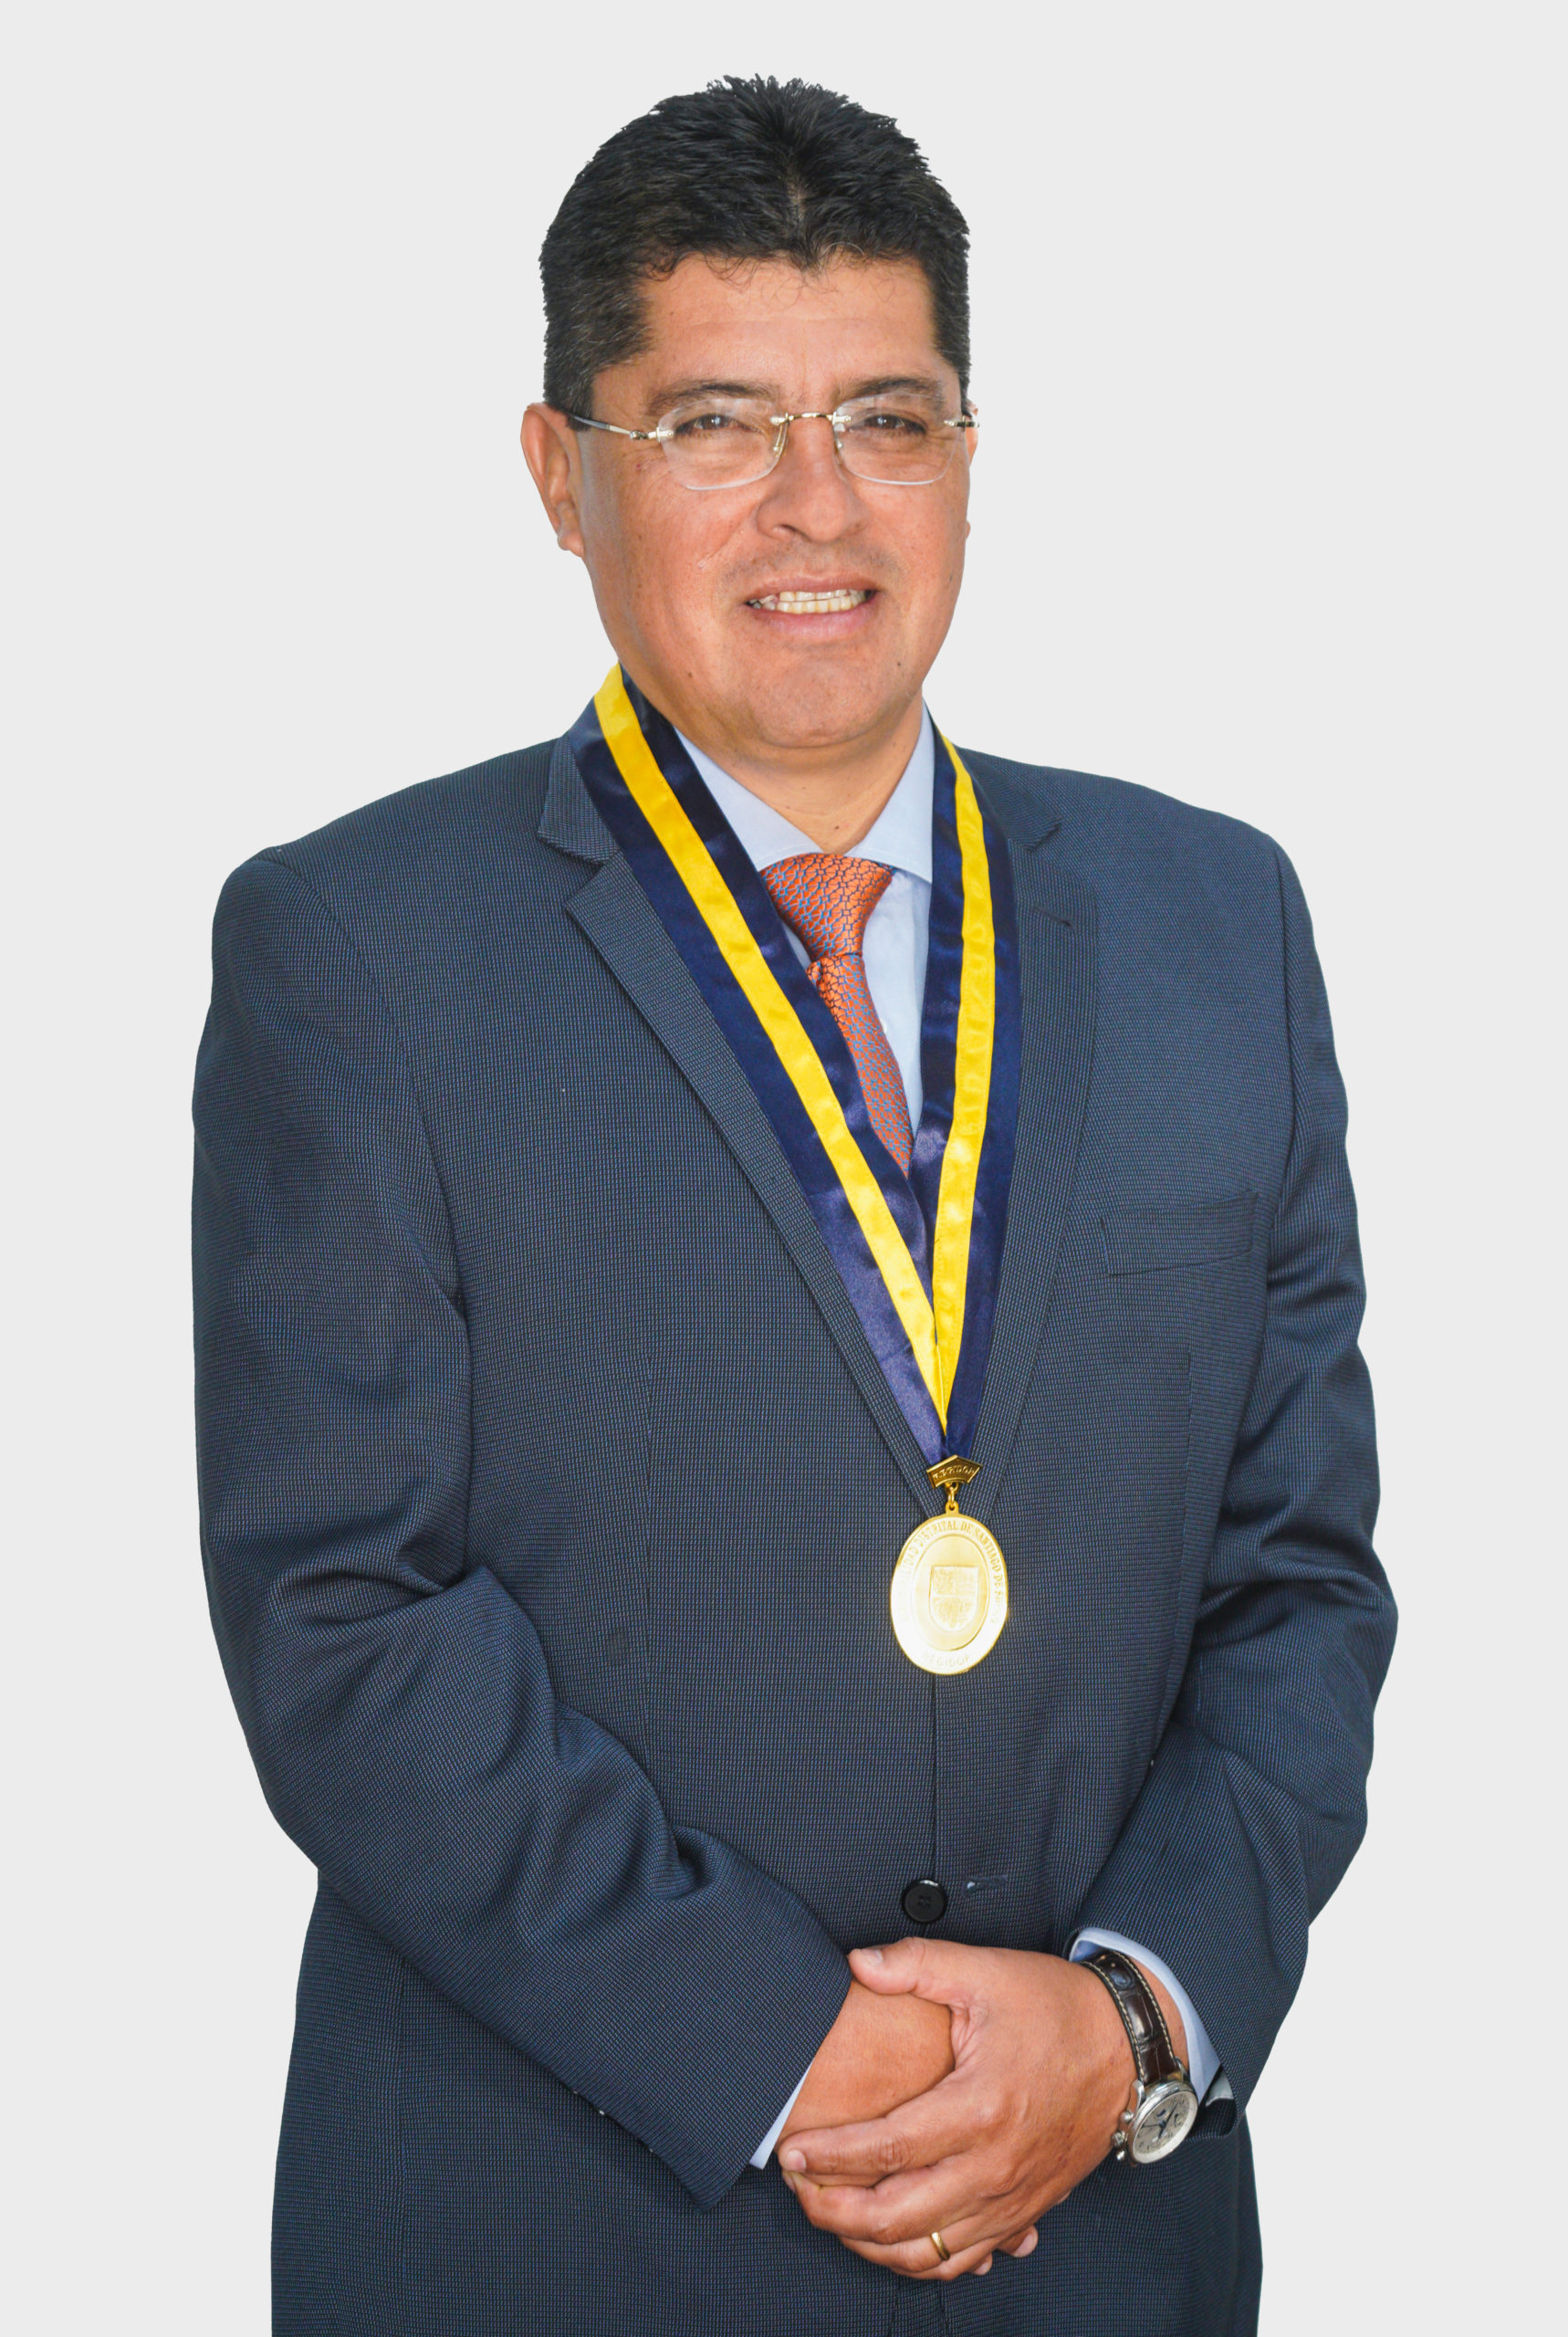 Roberto Gómez Baca